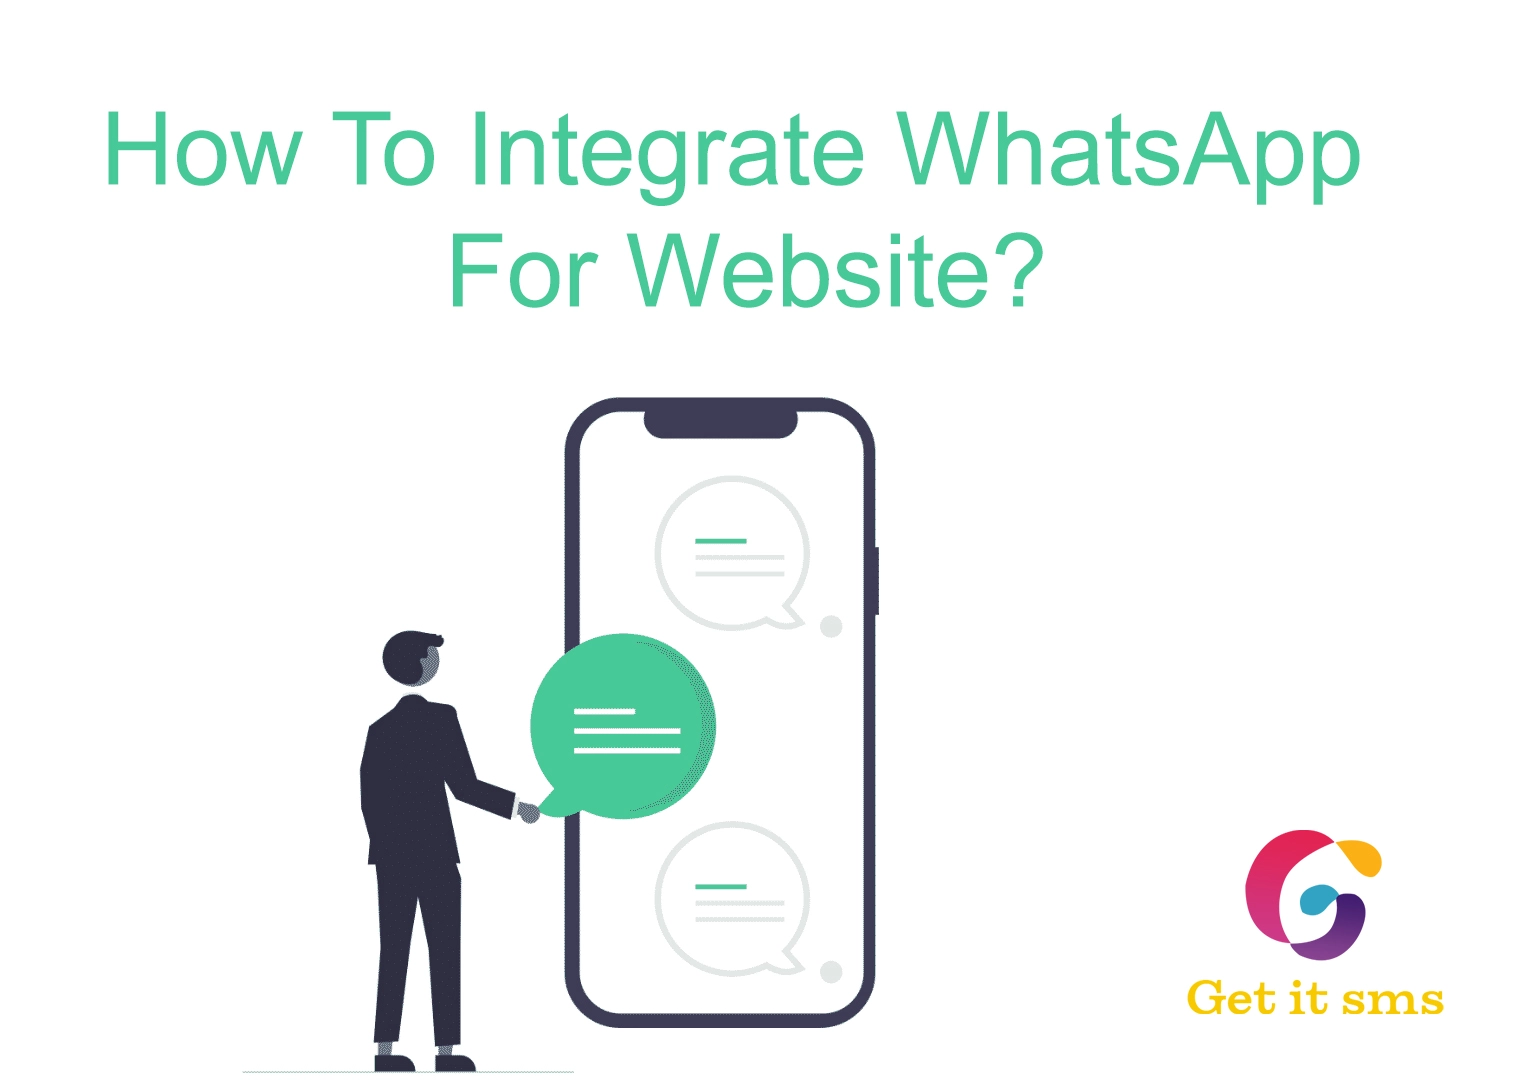 WhatsApp Website Integration: How To Integrate WhatsApp For Website?